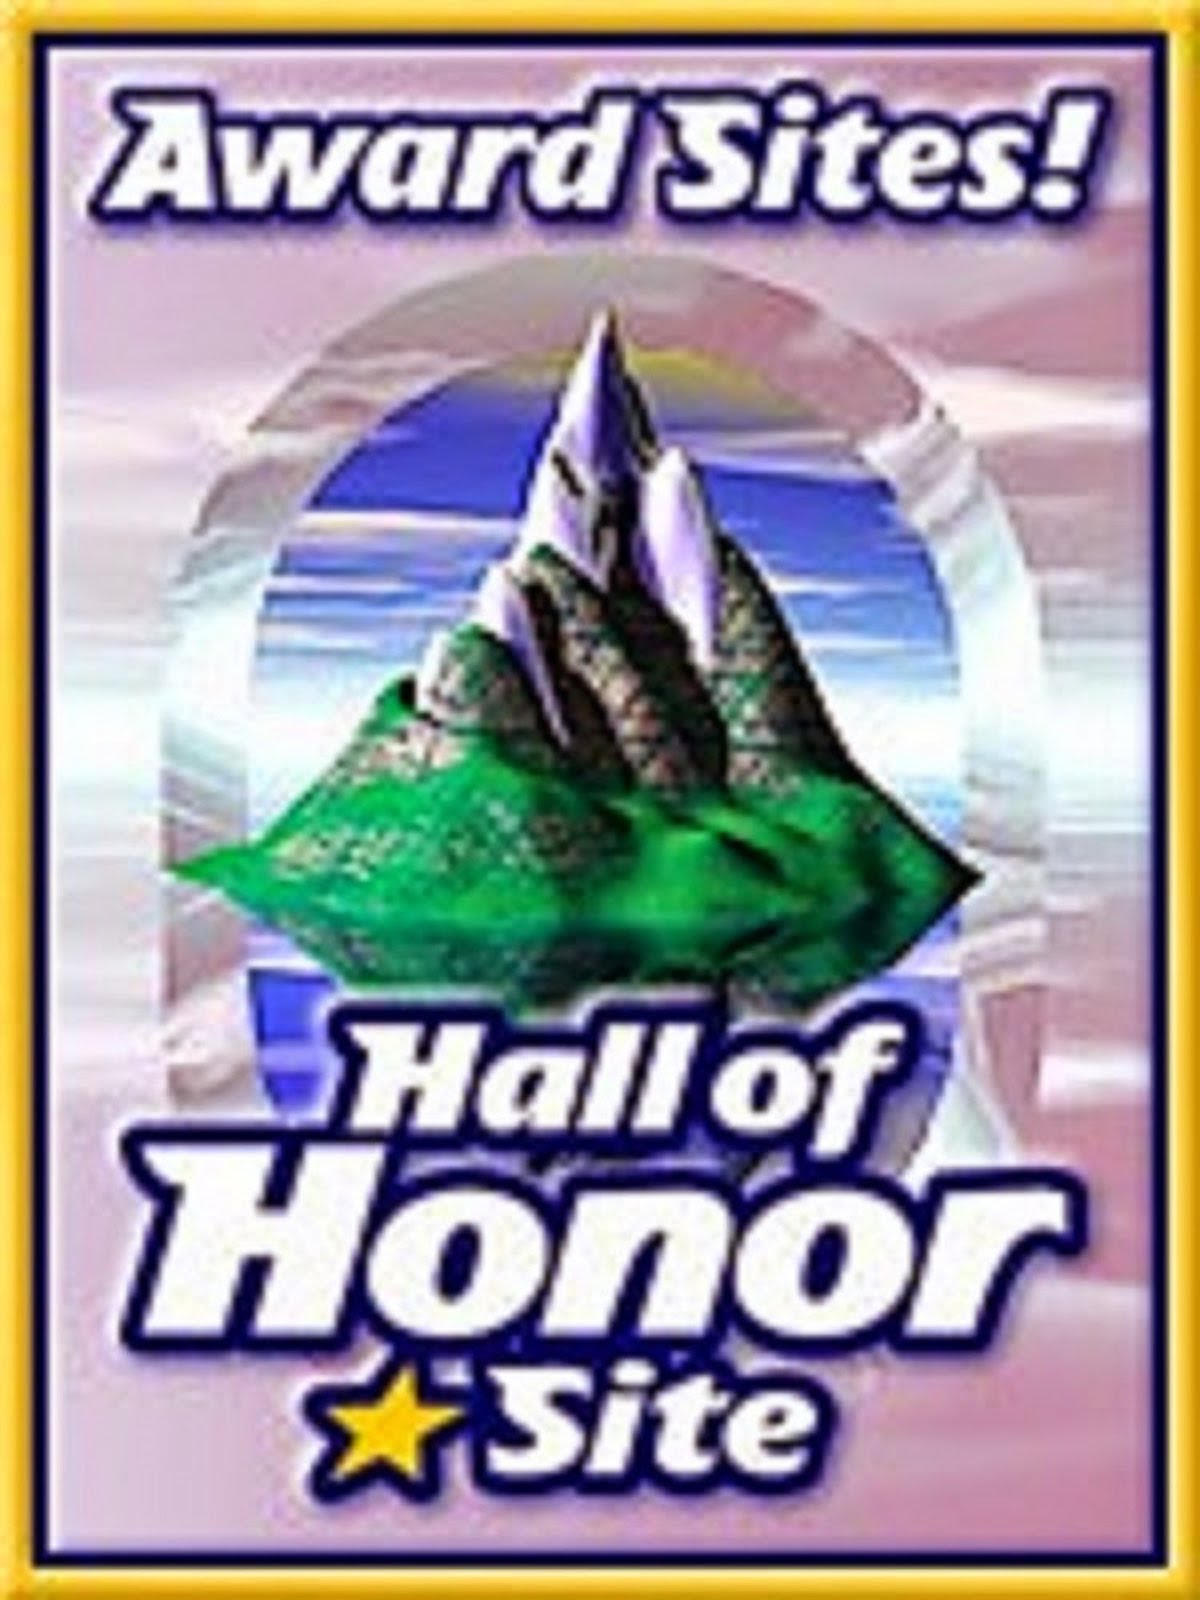 HALL OF HONOR - AWARD SITE!